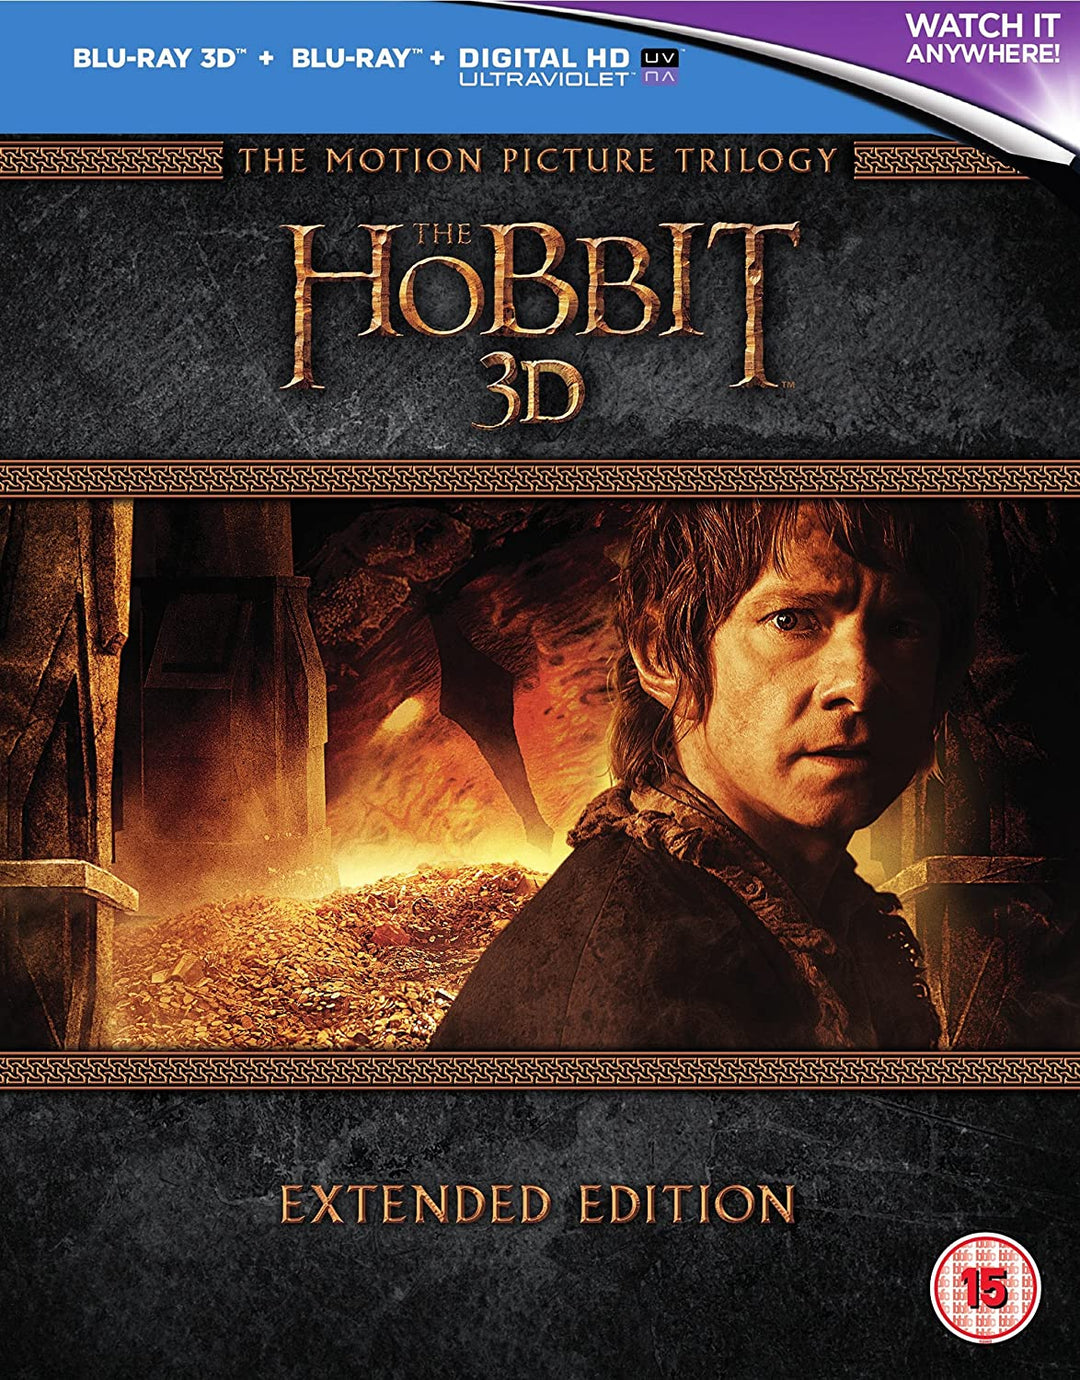 Die Hobbit-Trilogie - Extended Edition [Blu-ray 3D] [2015] [Region Free]